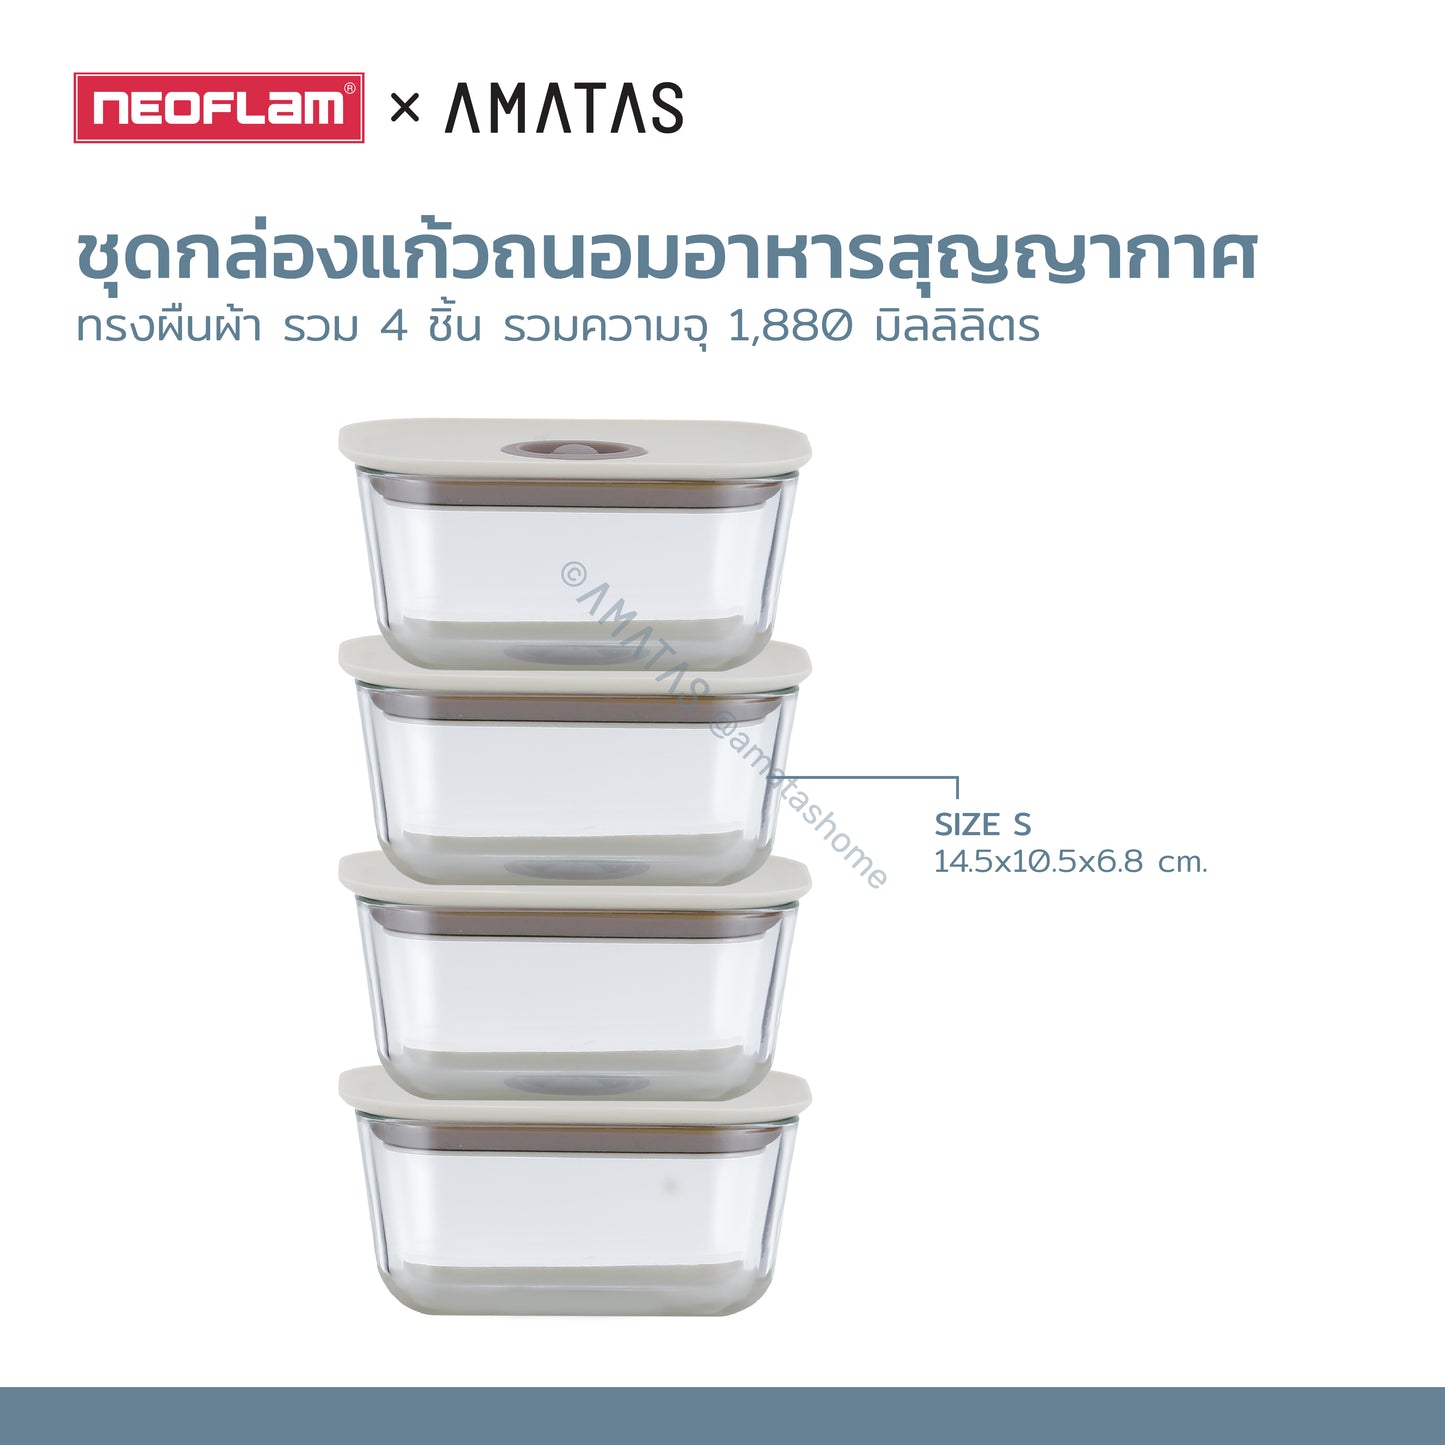 Neoflam FIKA กล่องแก้วสุญญากาศ SET กล่องข้าว กล่องใส่อาหารแก้ว ทนร้อน-เย็น เข้าไมโครเวฟได้